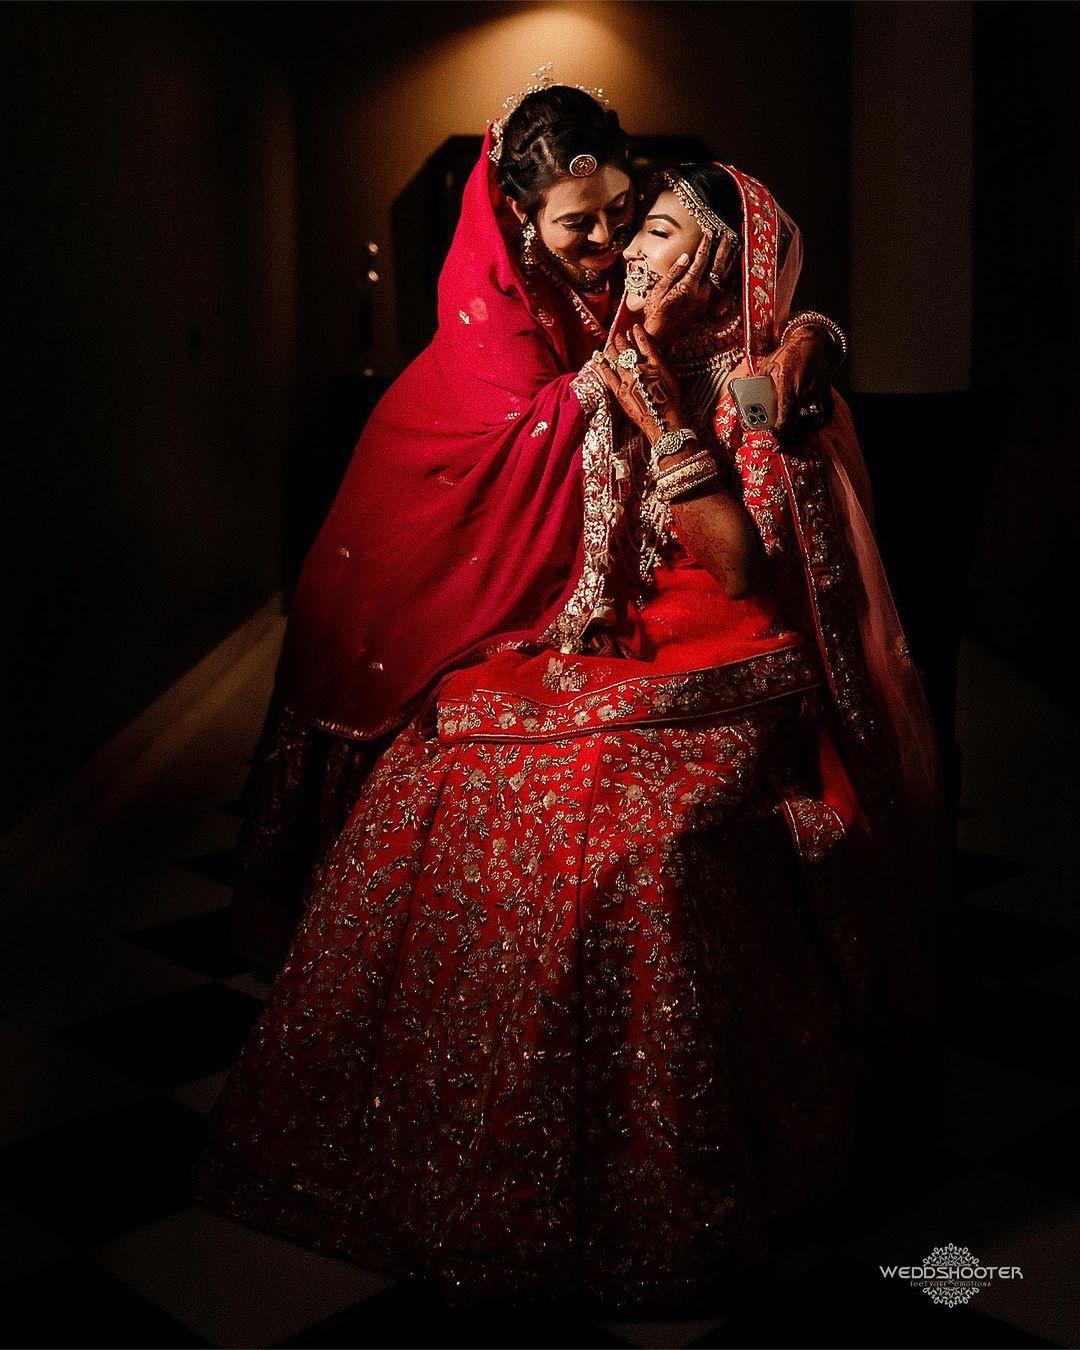 Pin by Vidushi Rathore on Bride World | Bride photos poses, Indian bride  photography poses, Indian bride poses